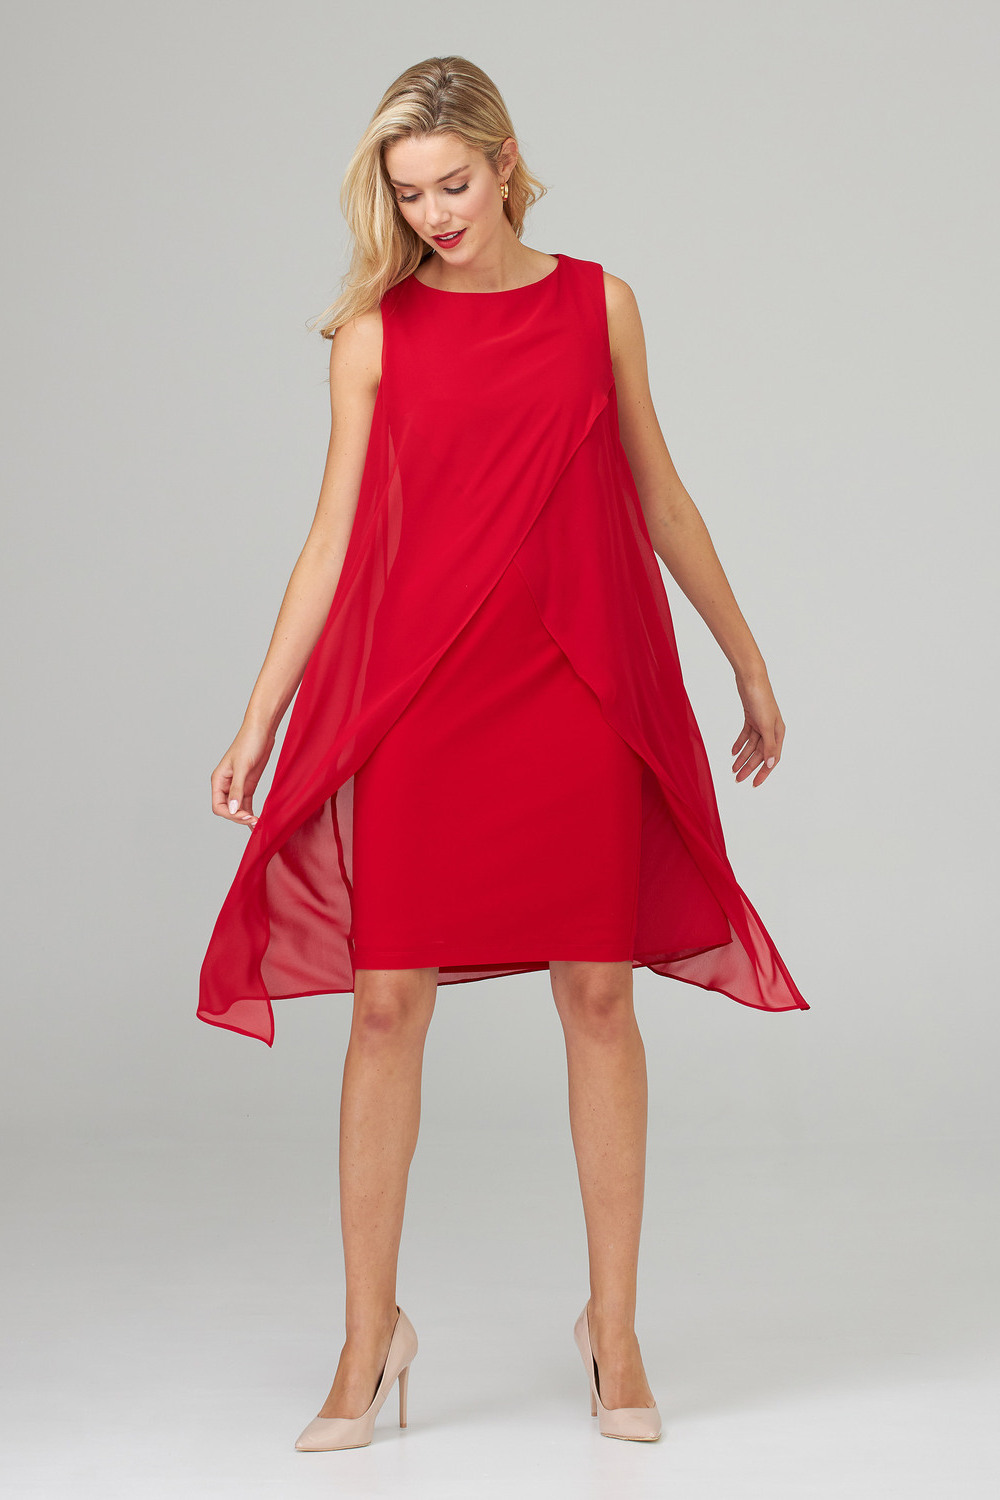 Joseph Ribkoff Dress Style 201220. Lipstick Red 173